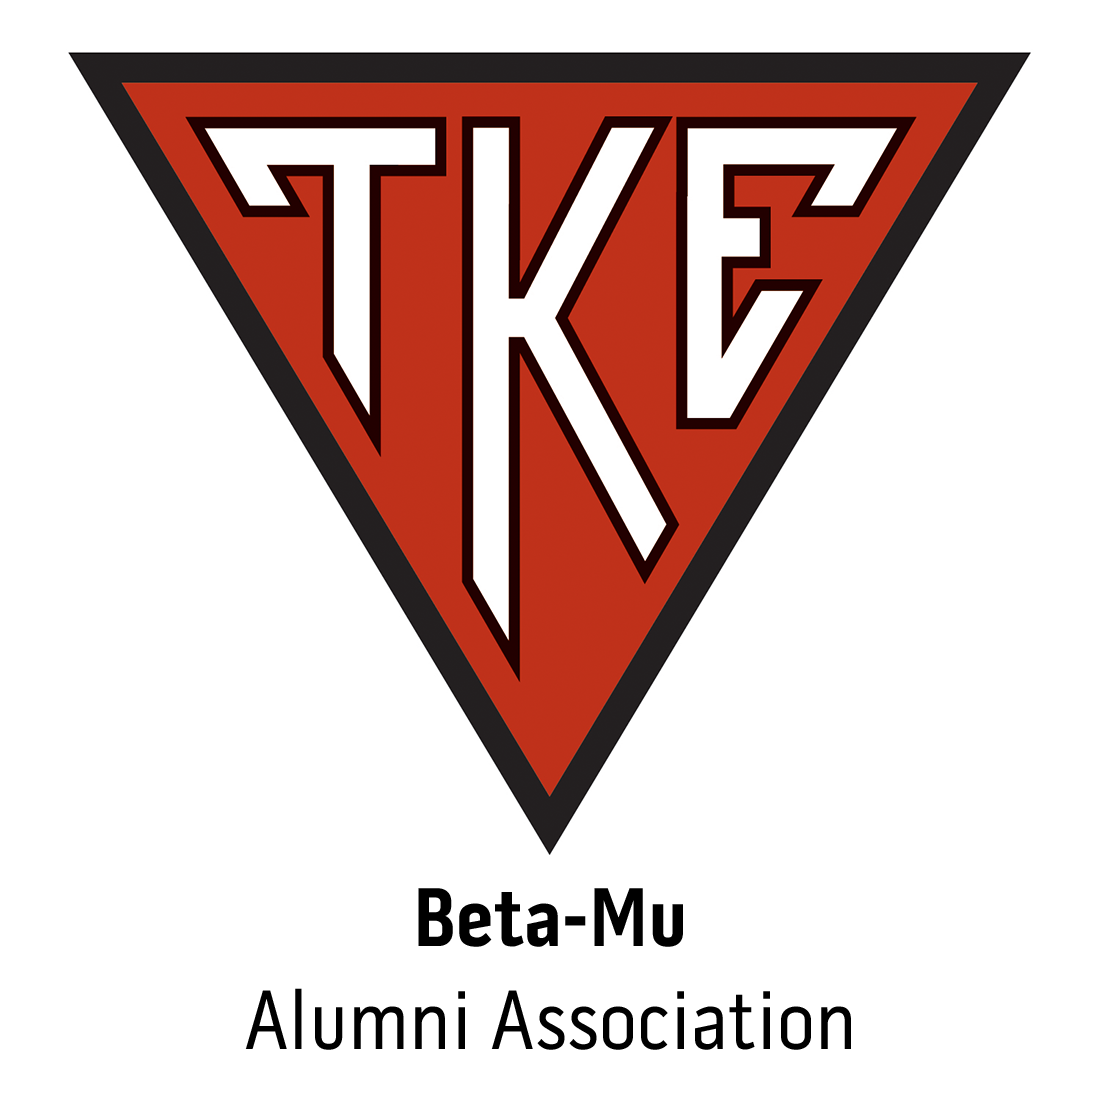 Beta-Mu Alumni Association at Bucknell University